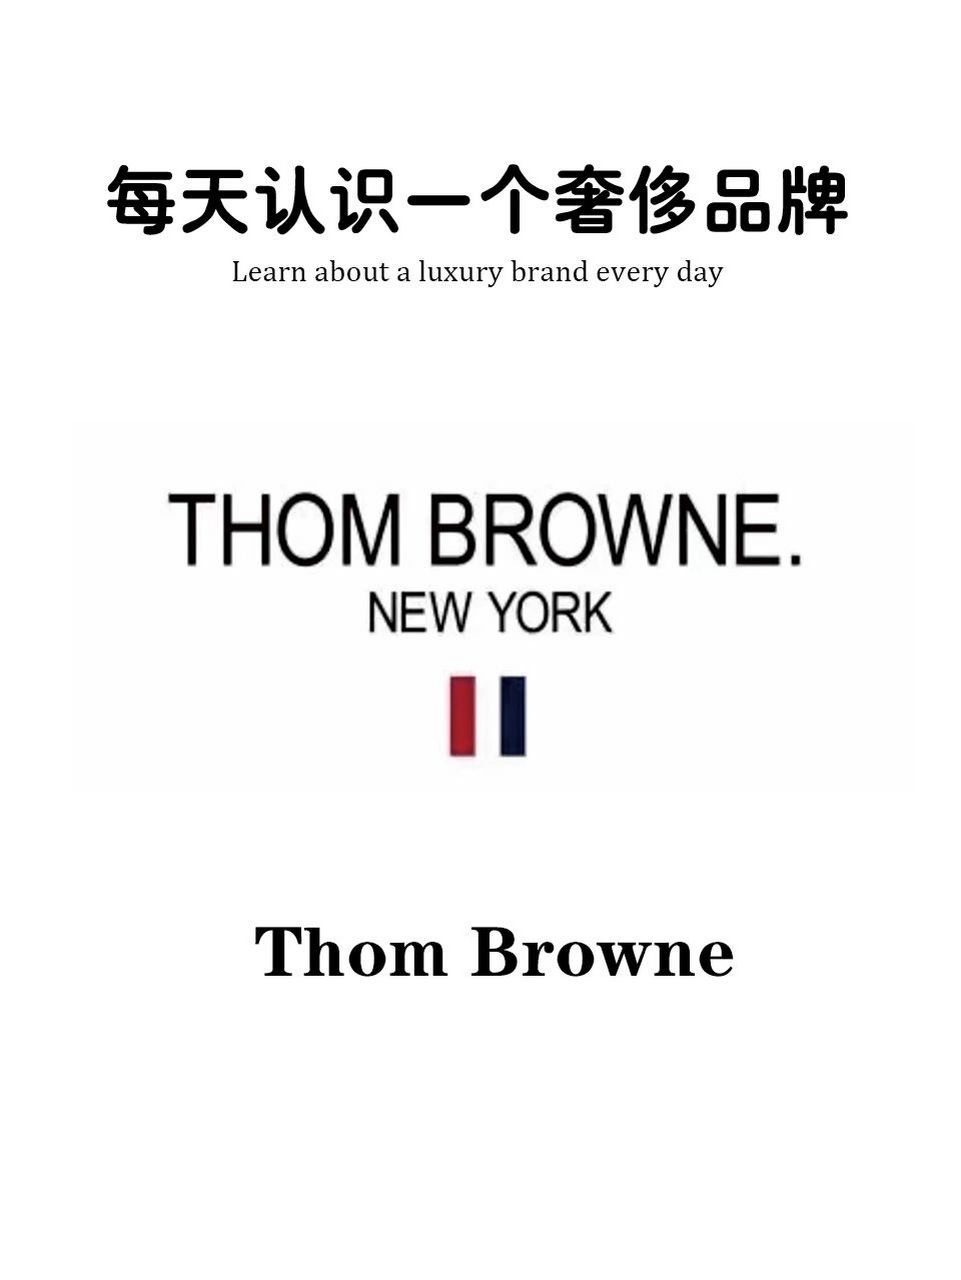 thom browne logo 壁纸图片